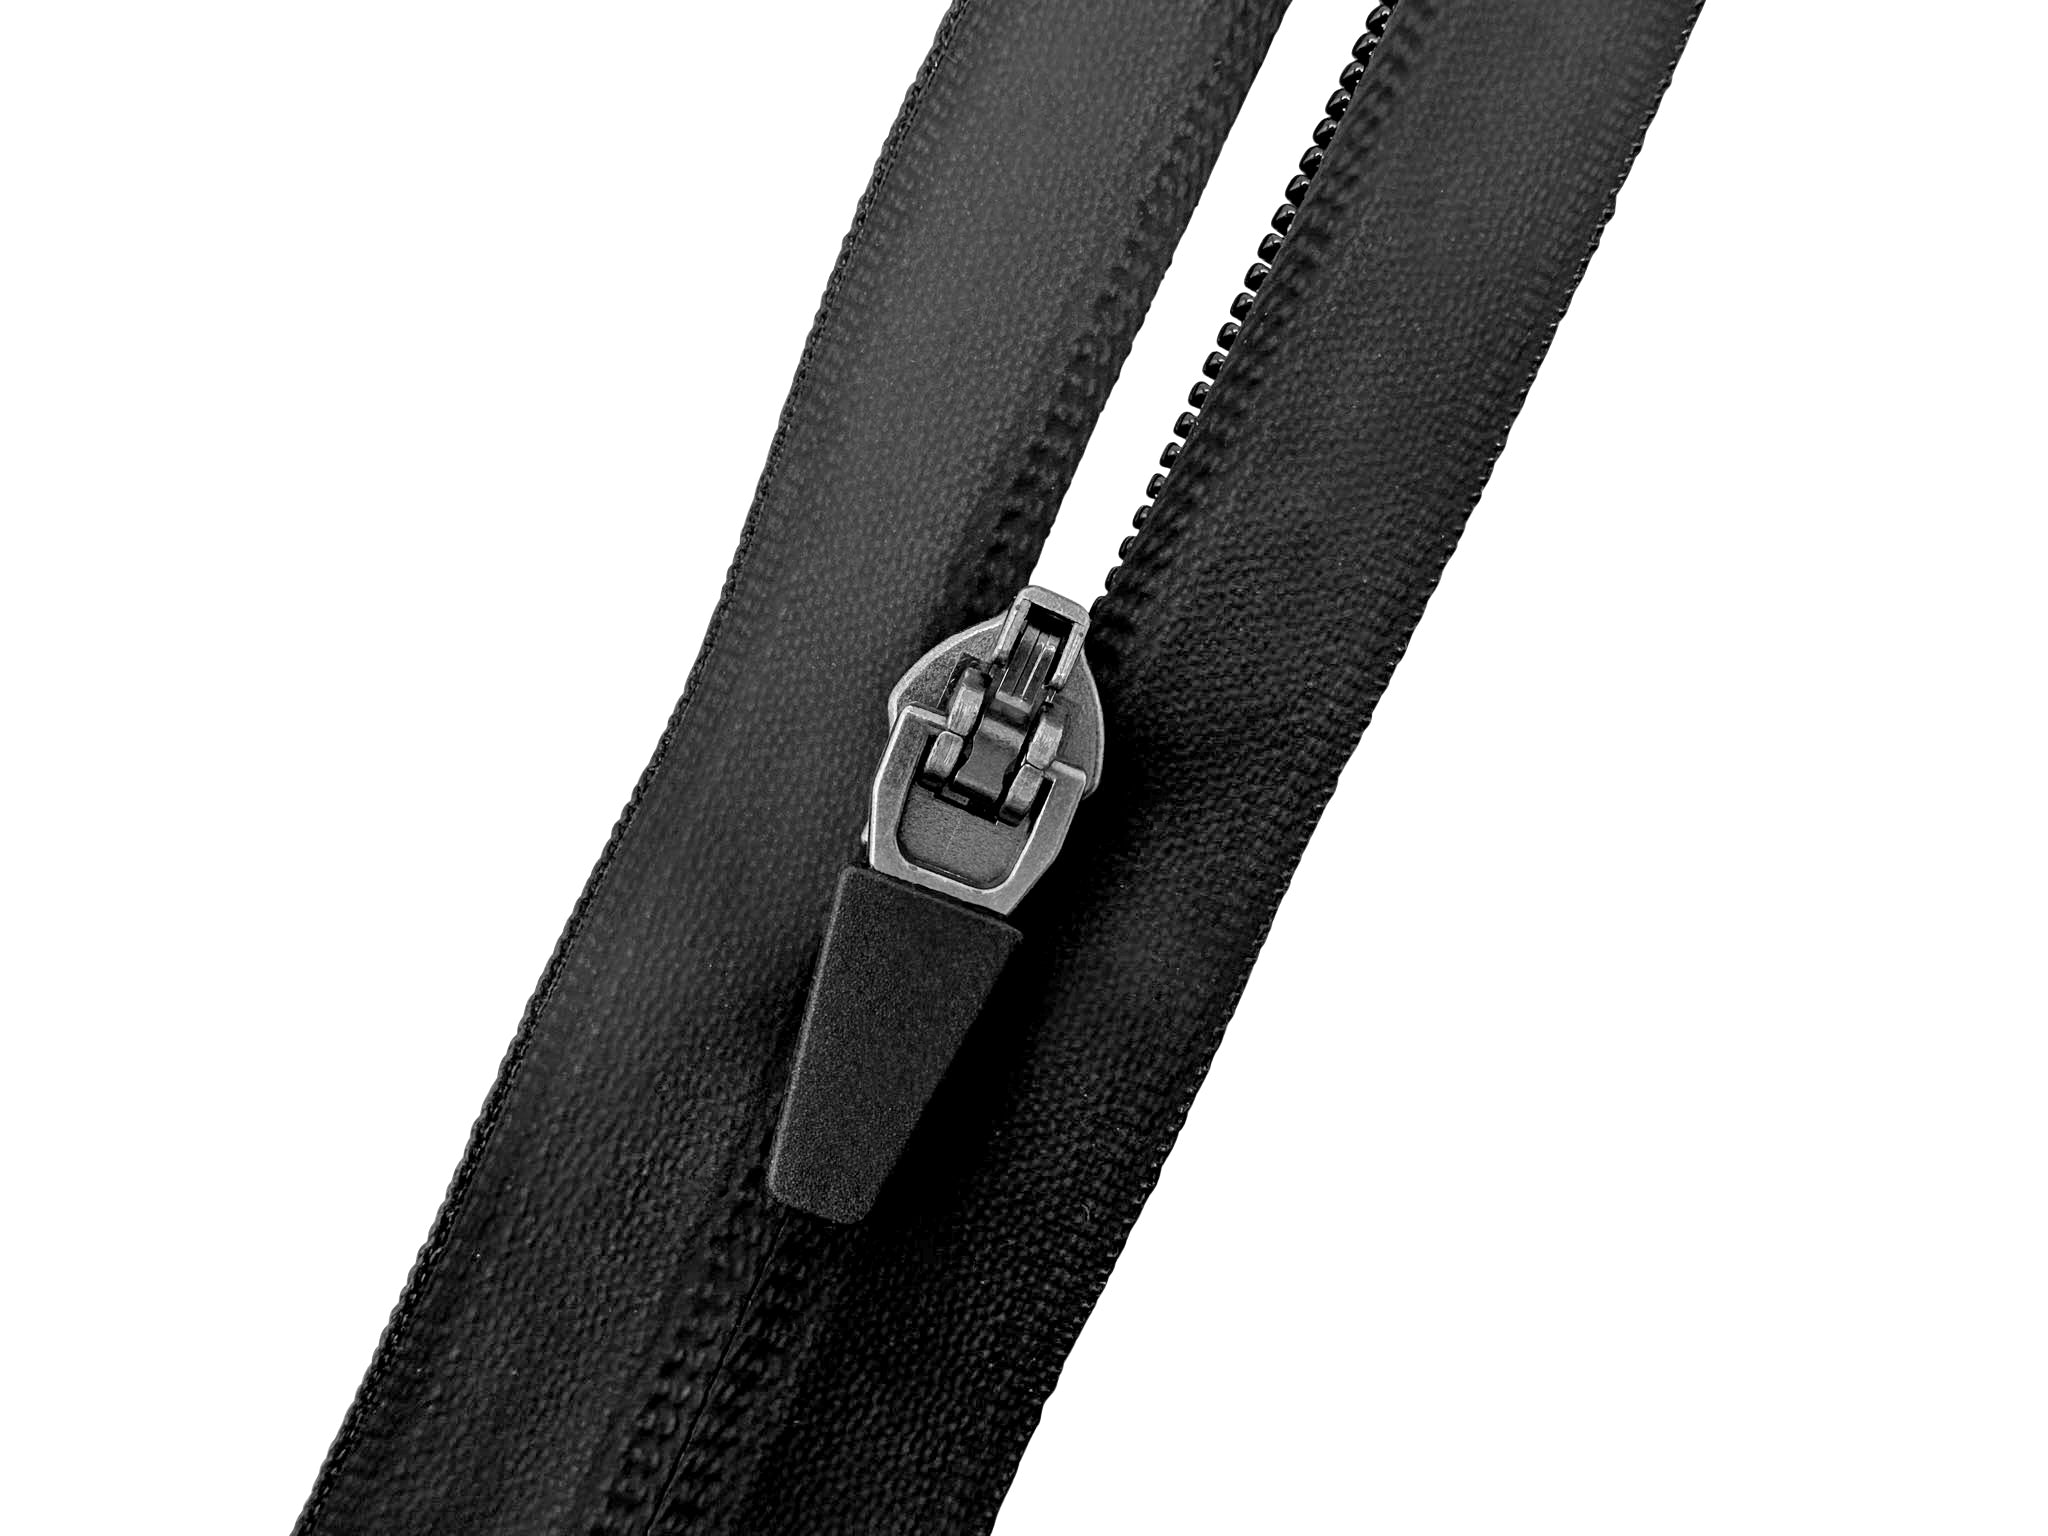 Waterproof Black Zippers, 20 Cm, 7inc Zipper, Waterproof Zipper, Water  Resistant Zipper, Jacket Zipper, WRBZ 